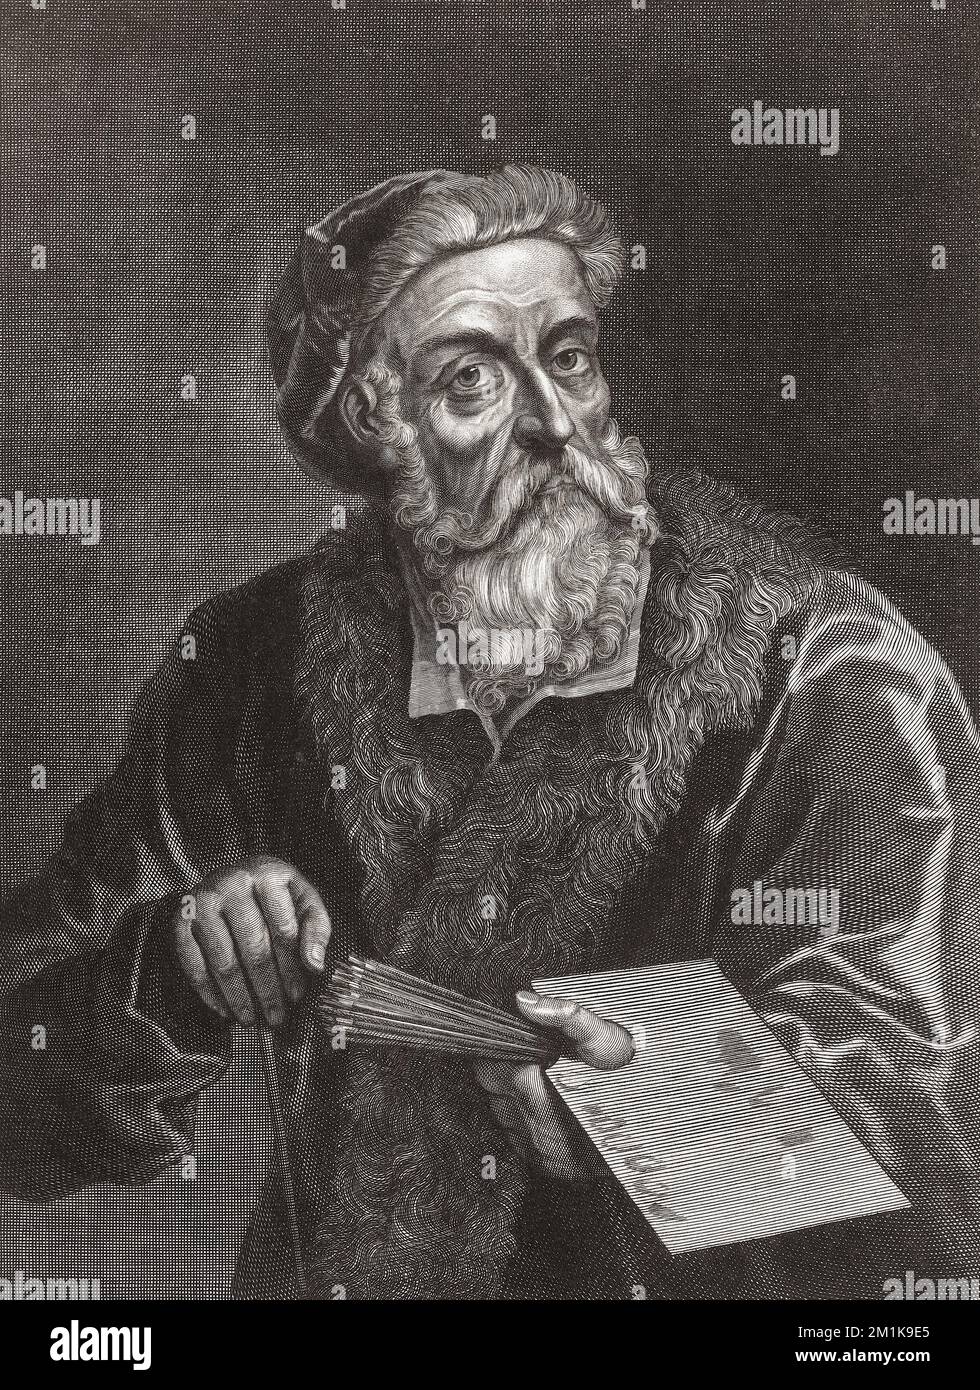 Tiziano Vecelli oder Tiziano Vecellio, c. 1488/1490 - 1576, allgemein bekannt als Tizian. Italienischer Maler. Stockfoto